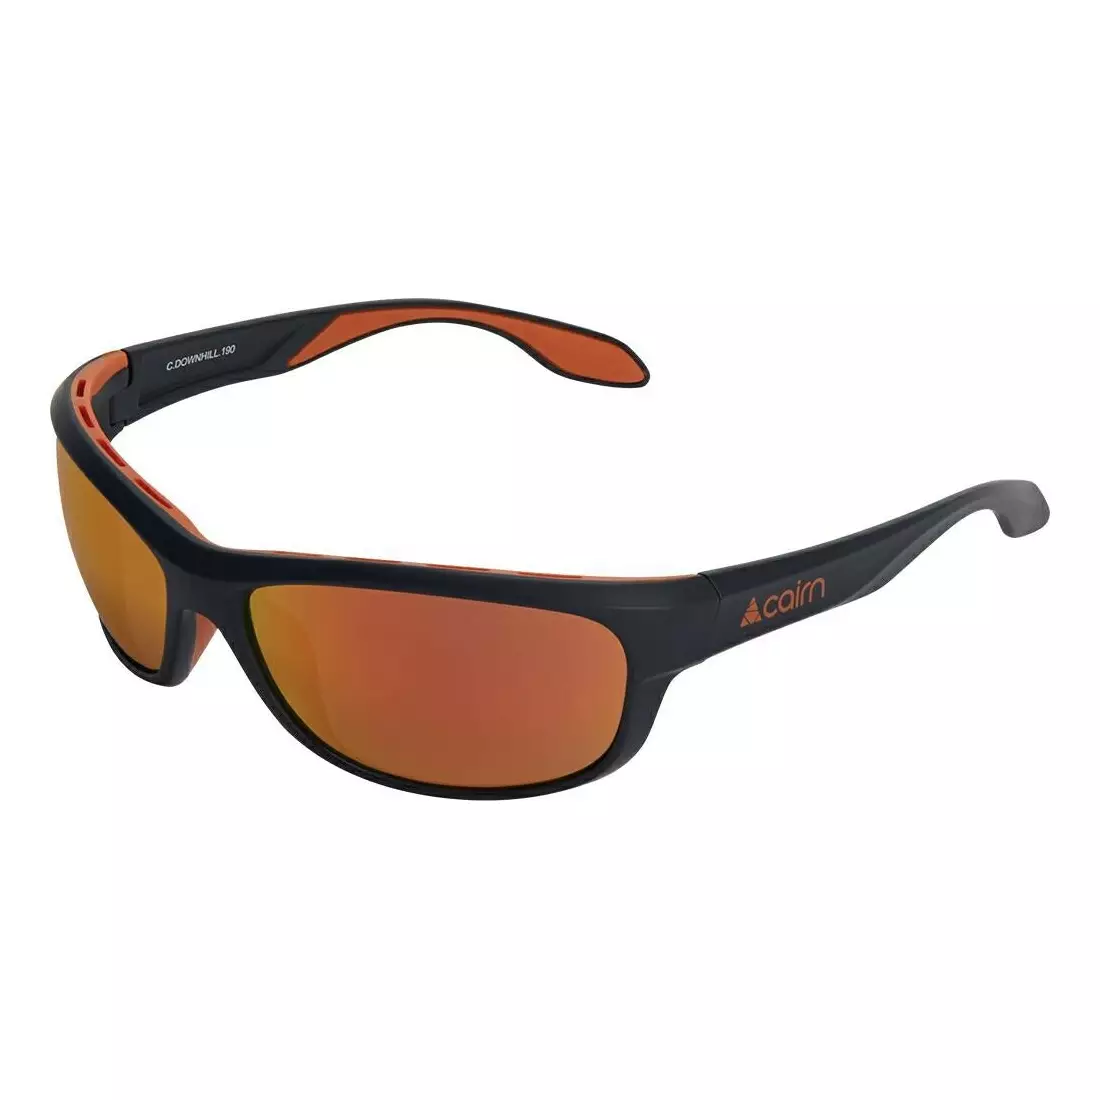 CAIRN sports glasses DOWNHILL 190, black-orange CDOWNHILL190